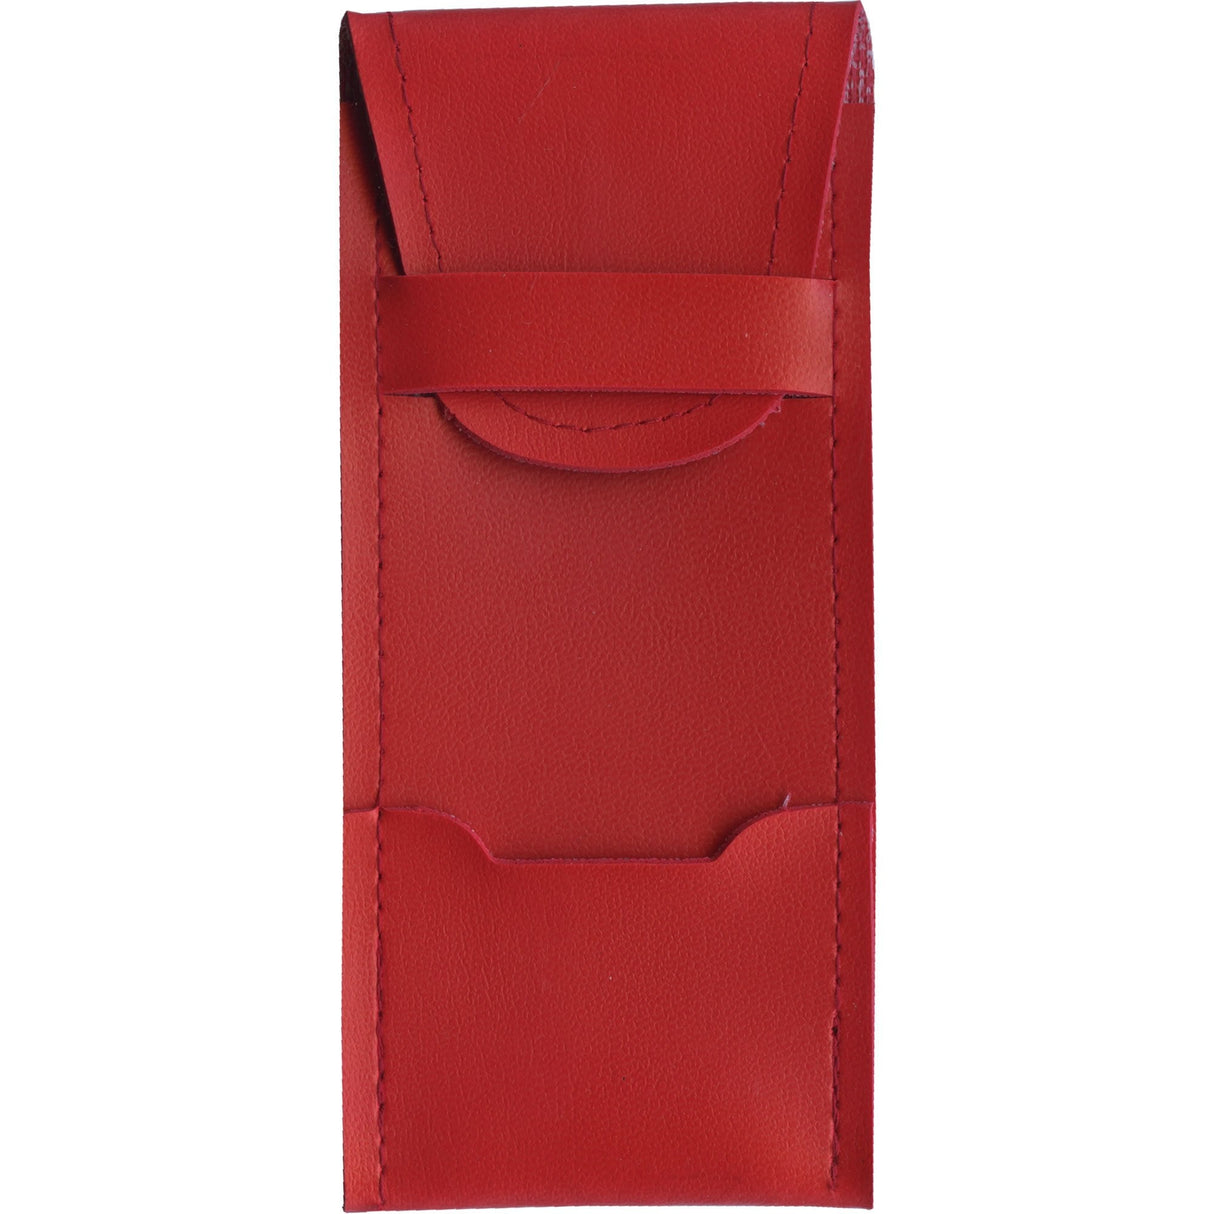 Designa Dart Case - Bar Wallet - Standard Red